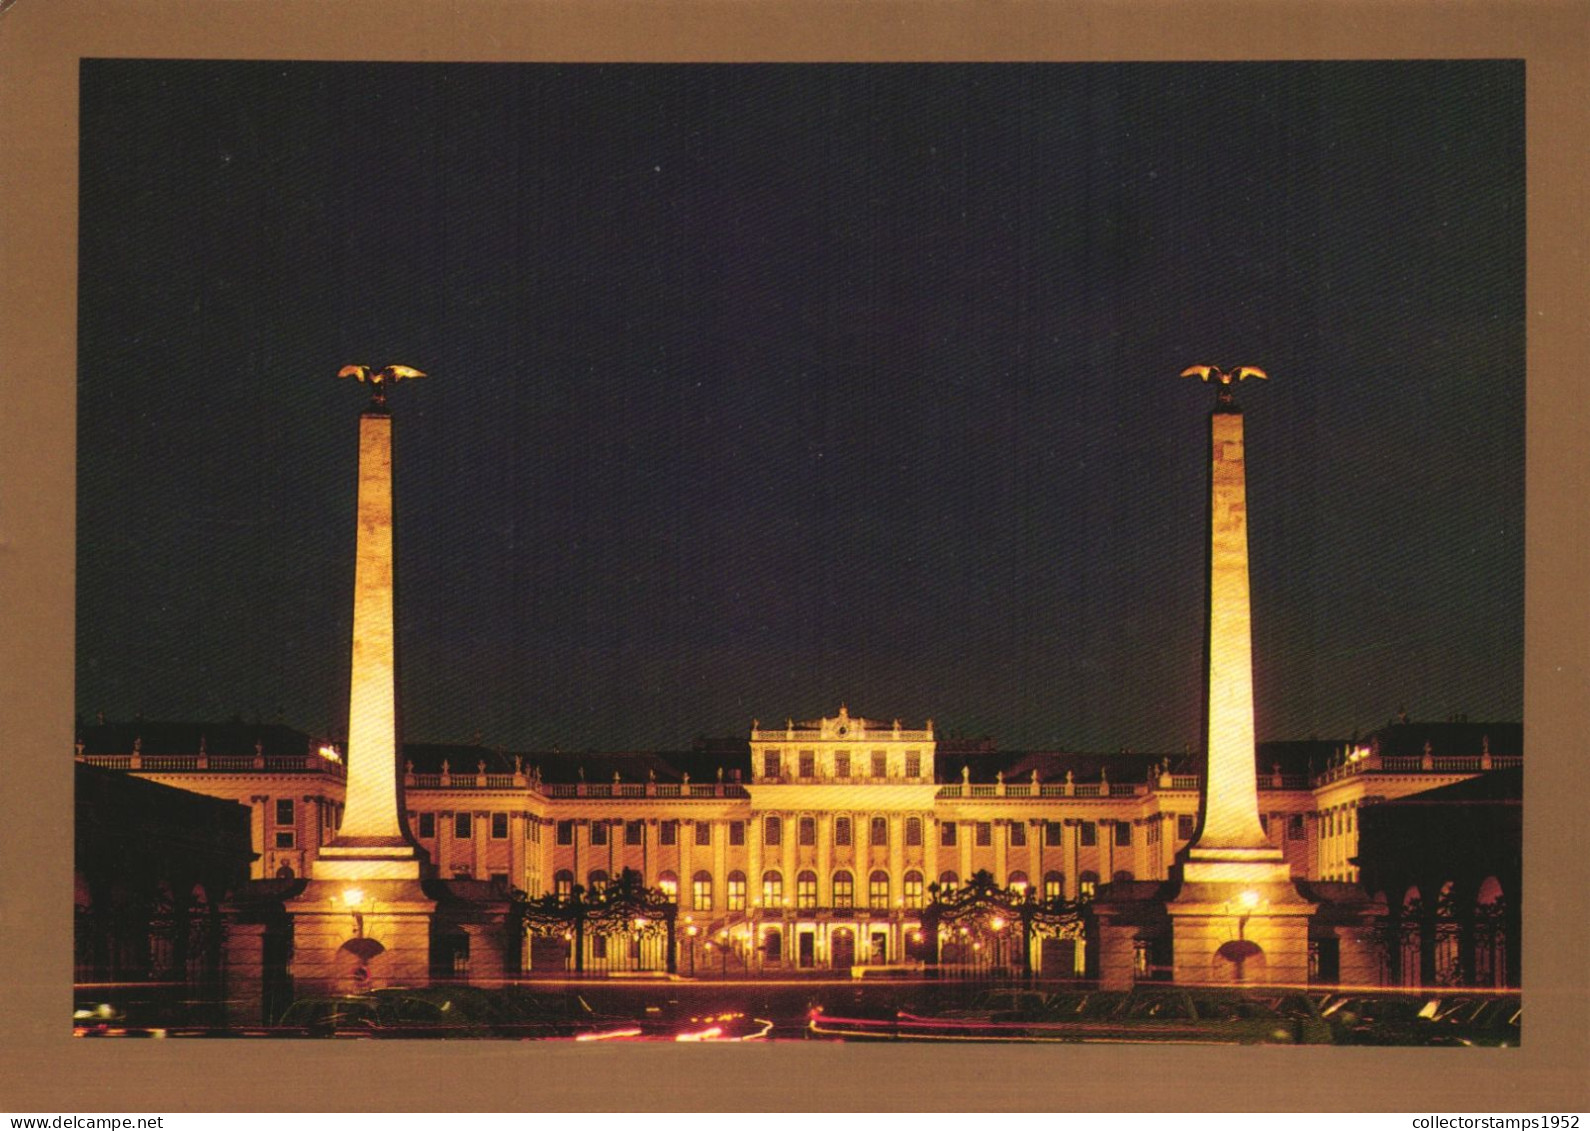 VIENNA, SCHÖNBRUNN PALACE, MONUMENT, ARCHITECTURE, AUSTRIA, POSTCARD - Schönbrunn Palace